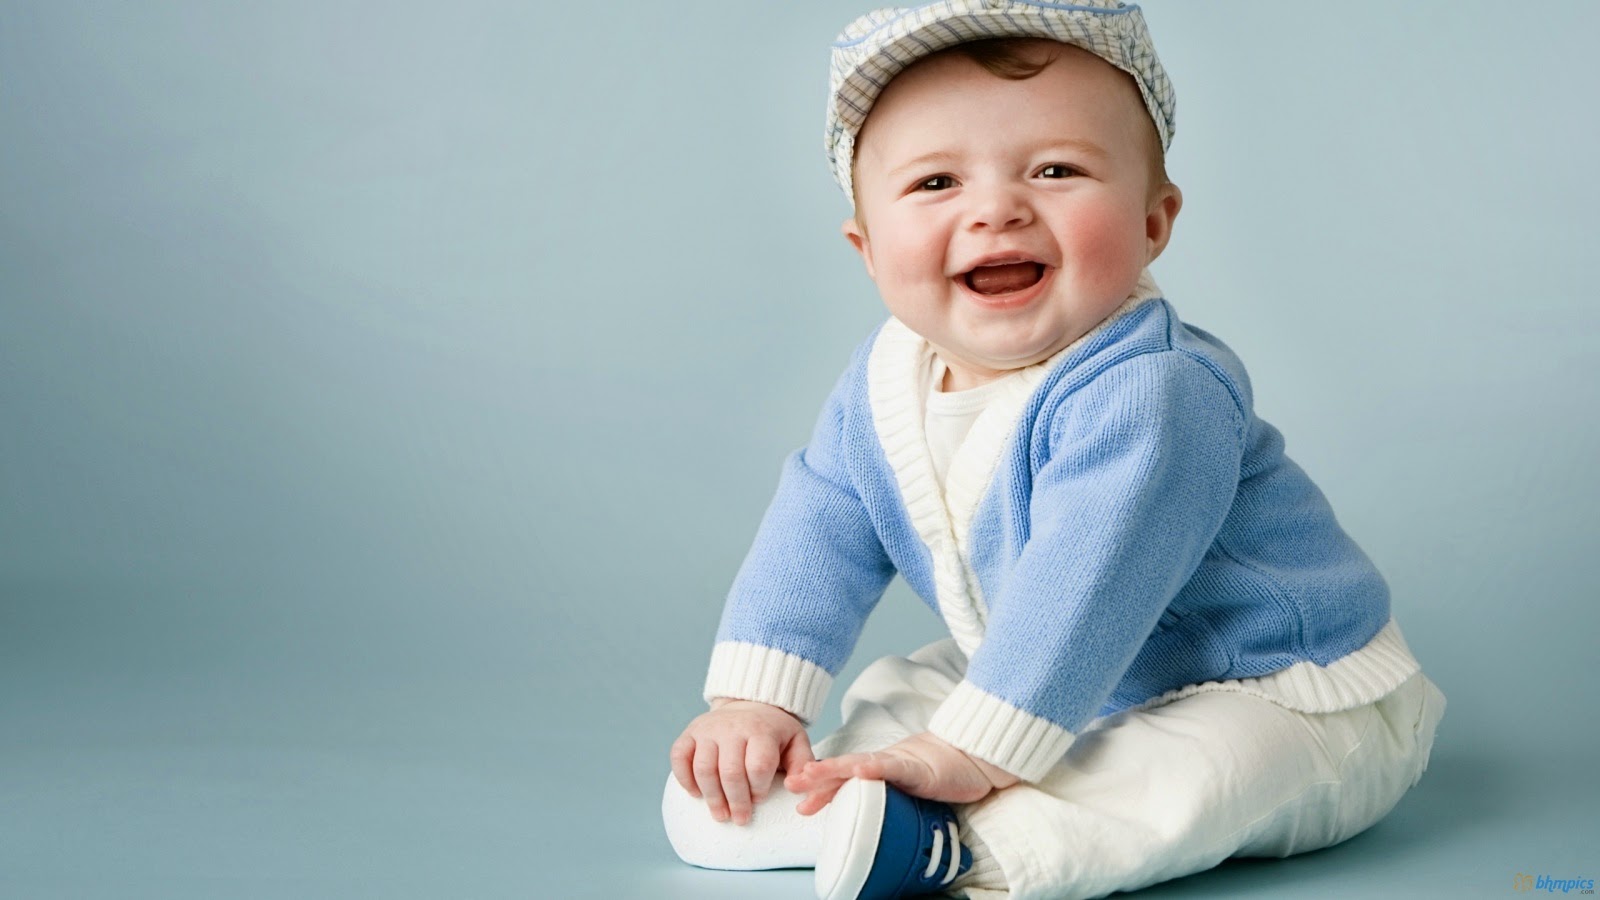 Baby Wallpaper1 - Baby Smile - HD Wallpaper 